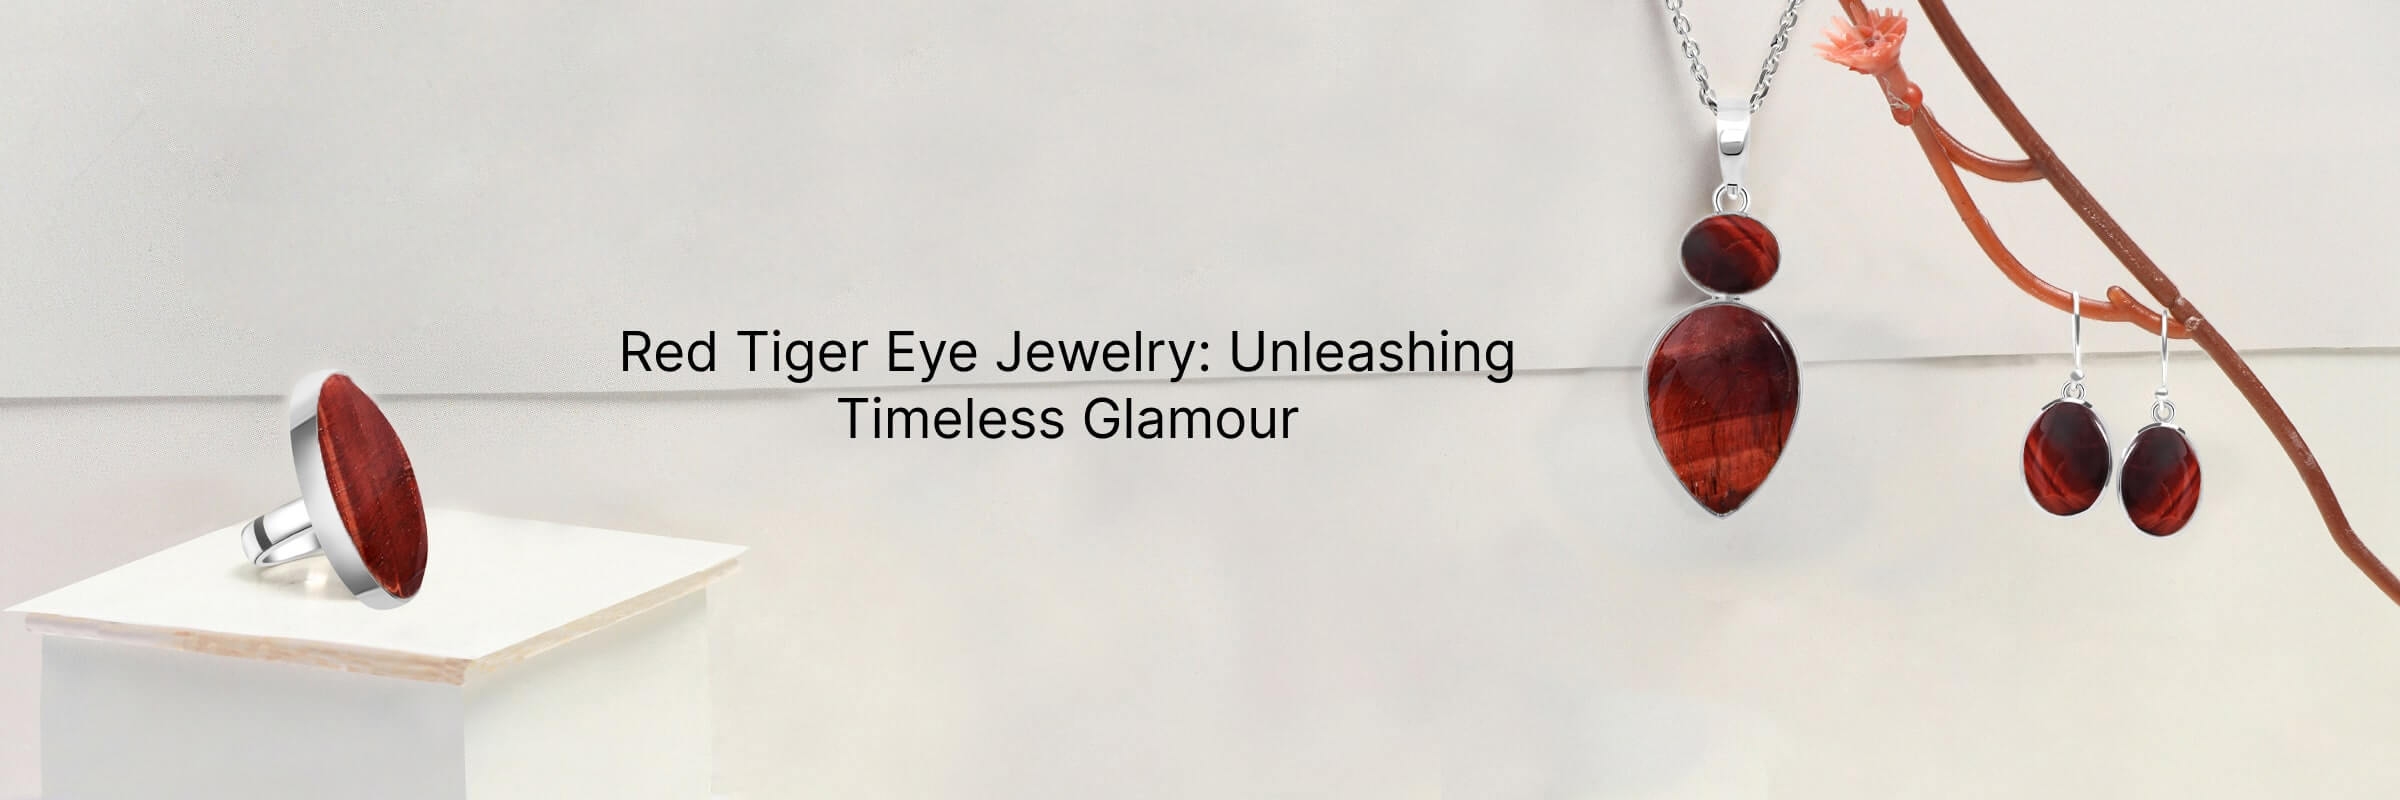 Red Tiger Eye Jewelry